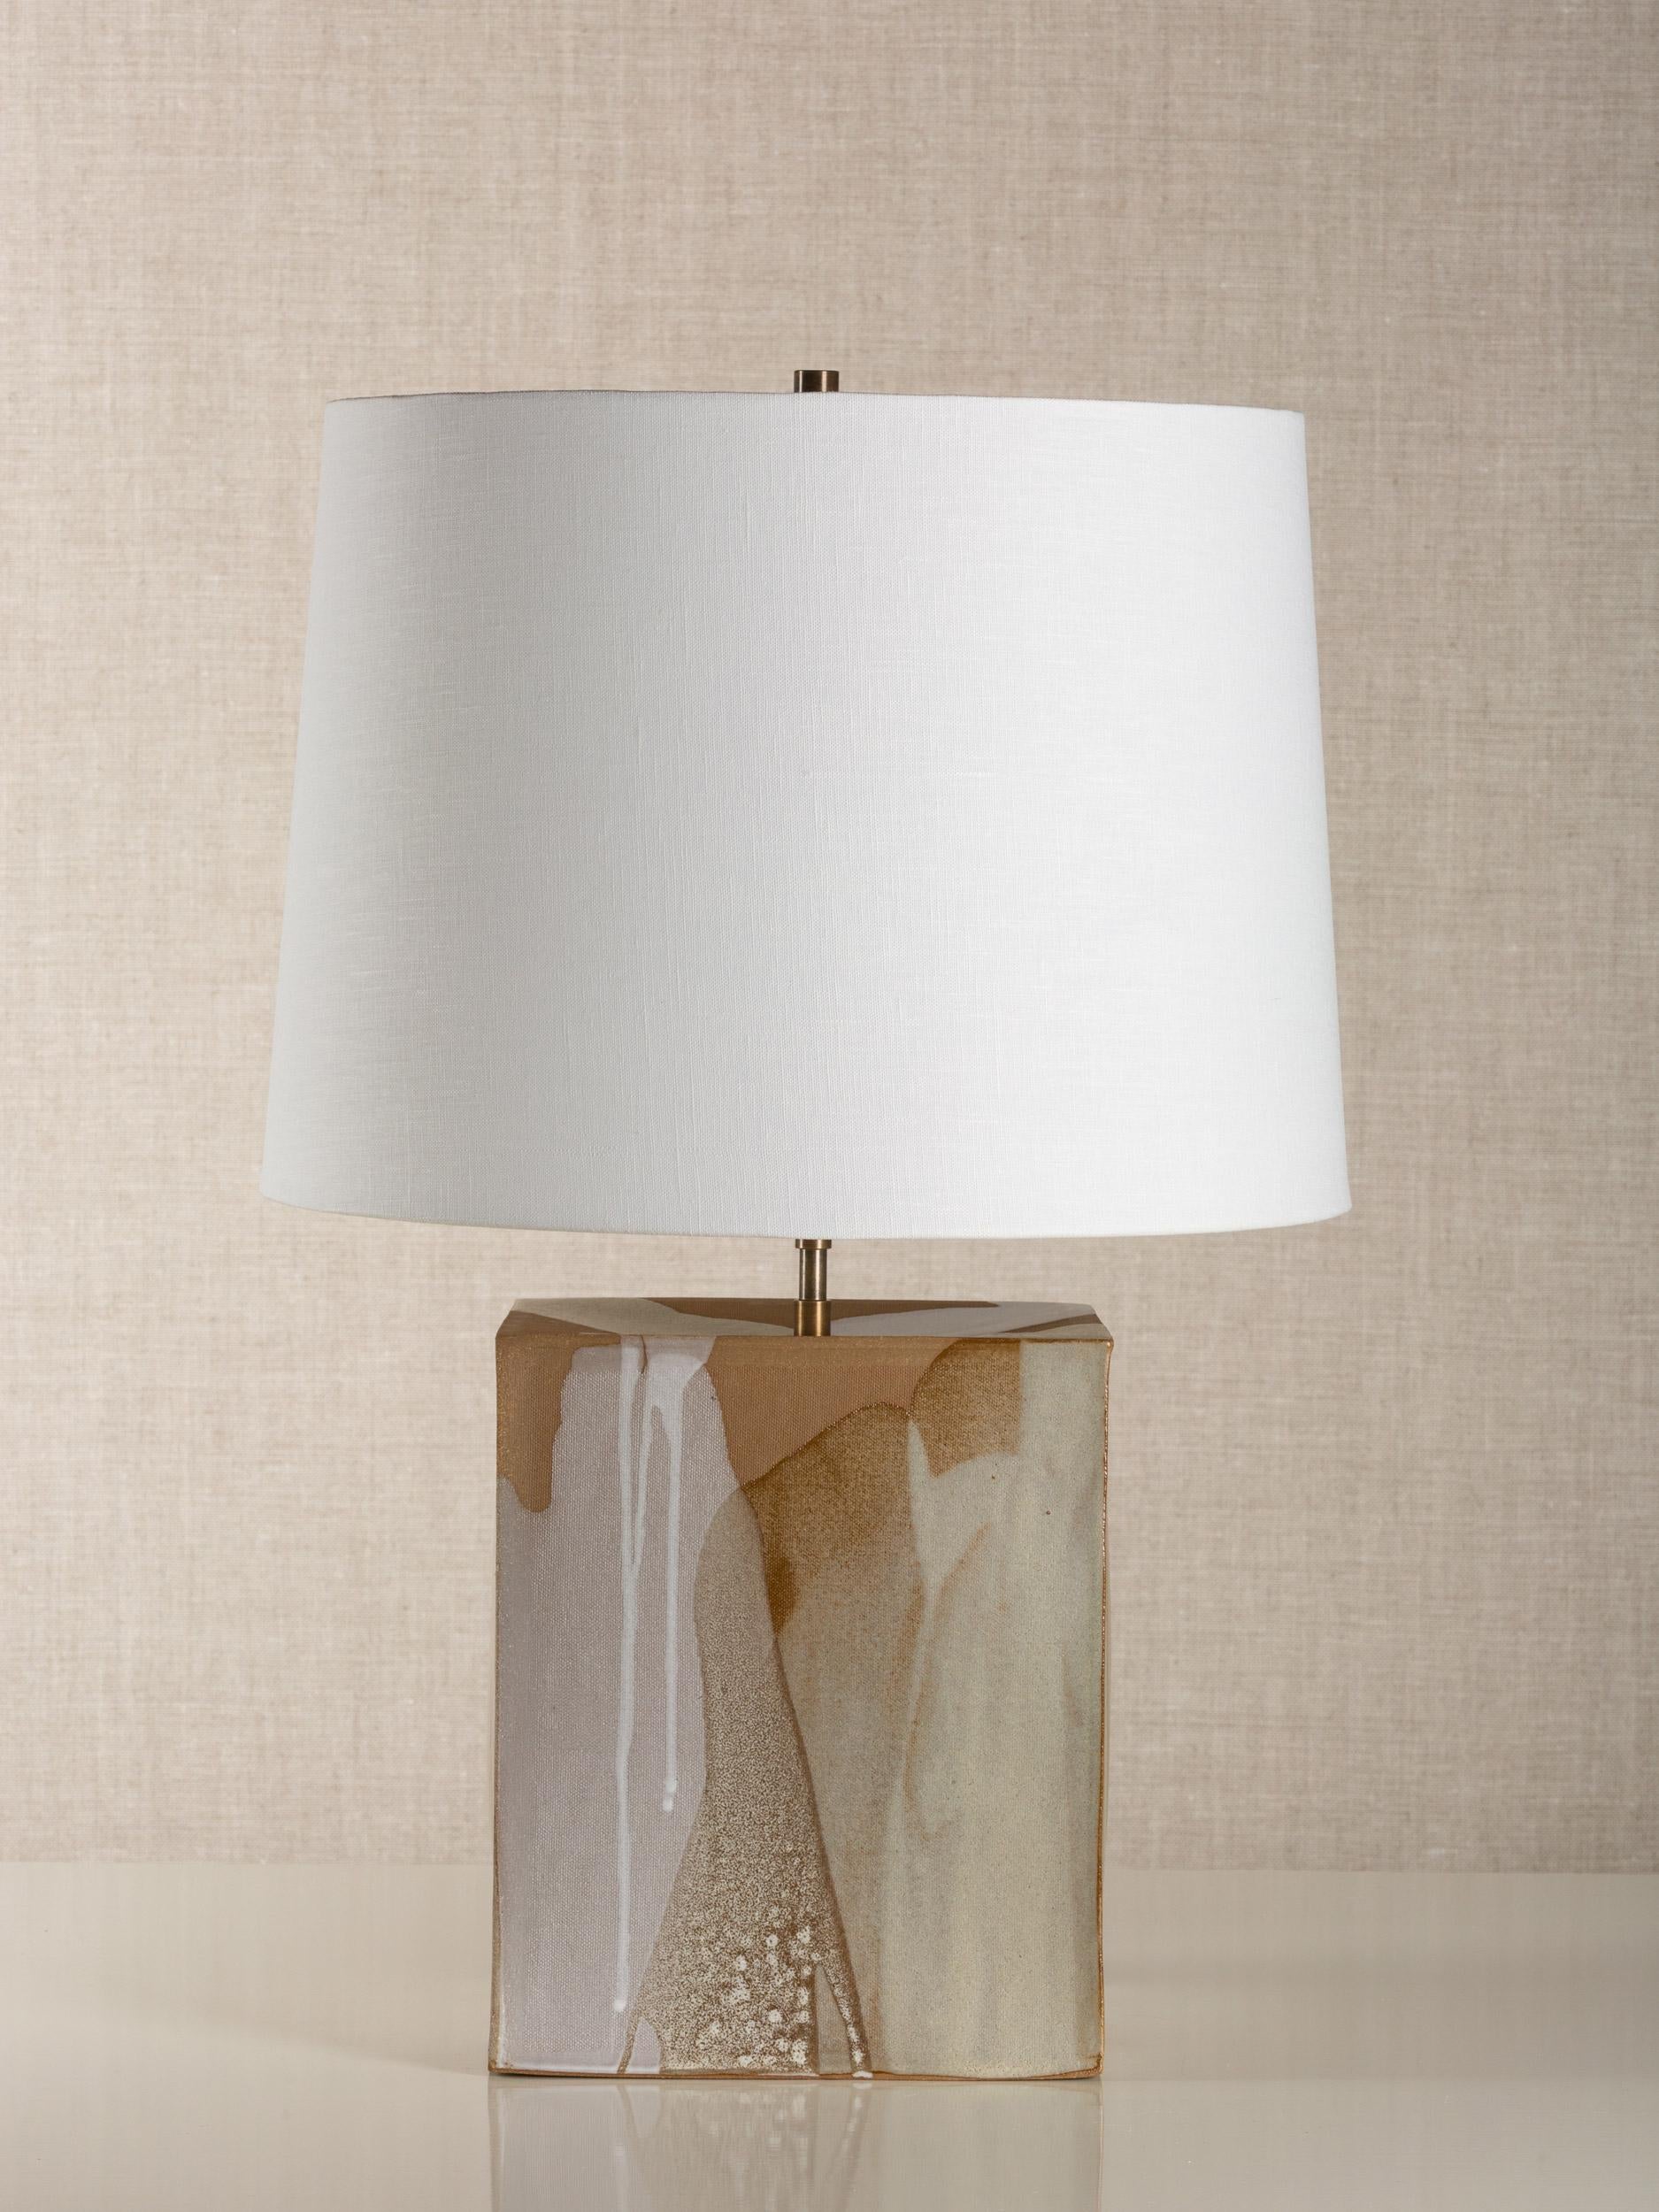 American Washington Lamp, Ceramic Sculptural Table Lamp by Dumais Made